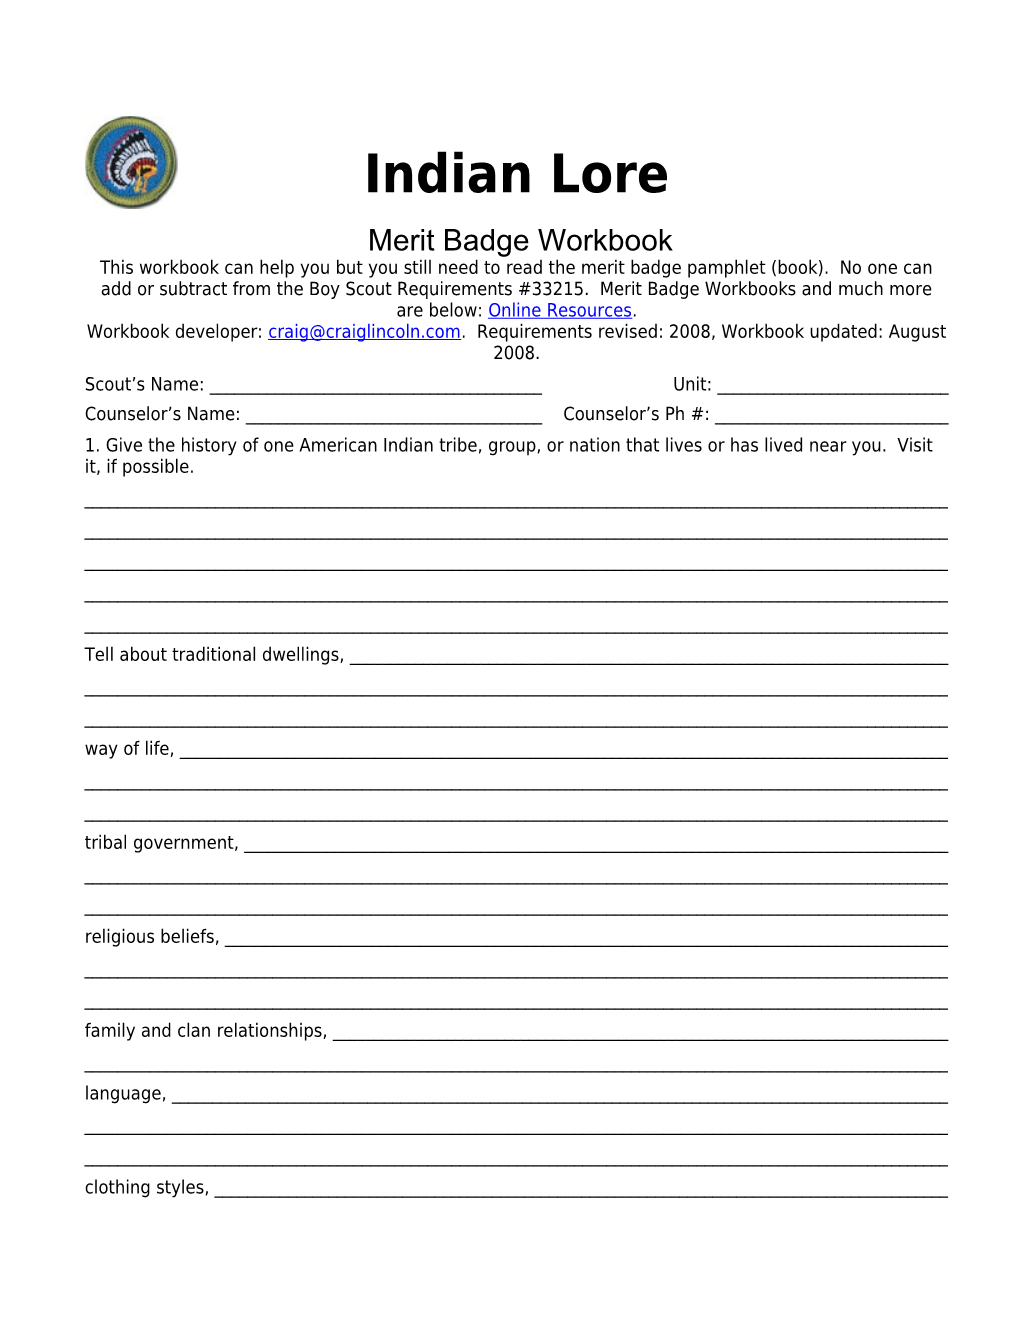 Indian Lore P. 2 Merit Badge Workbook Scout's Name: ______